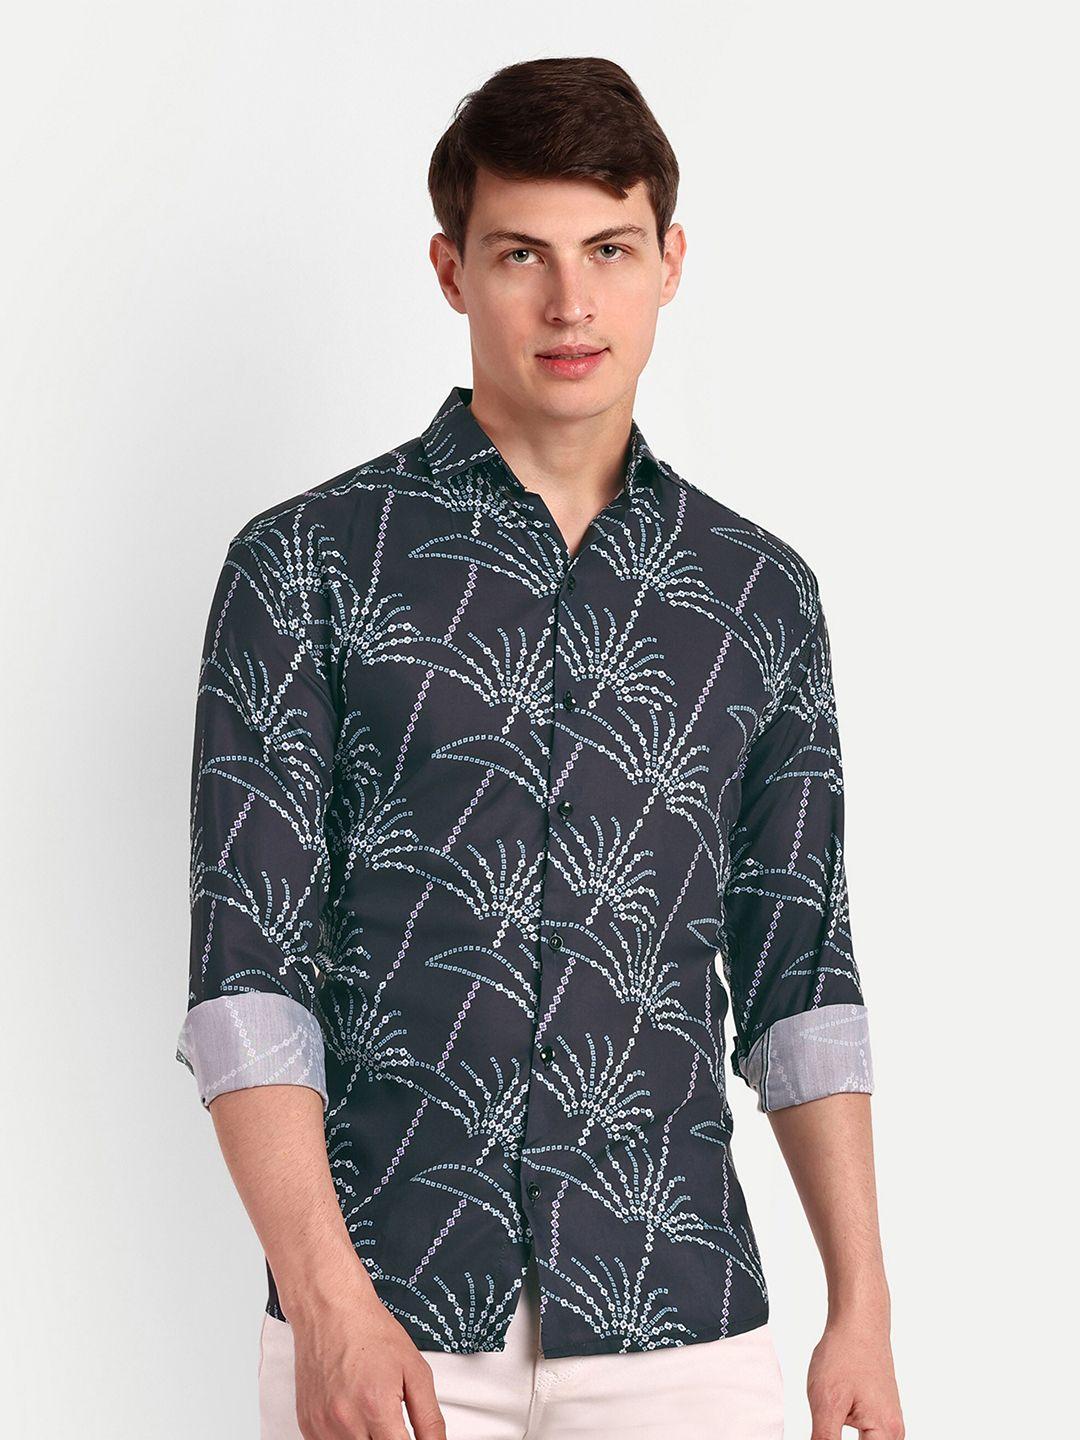 colorwings slim fit floral printed casual shirt